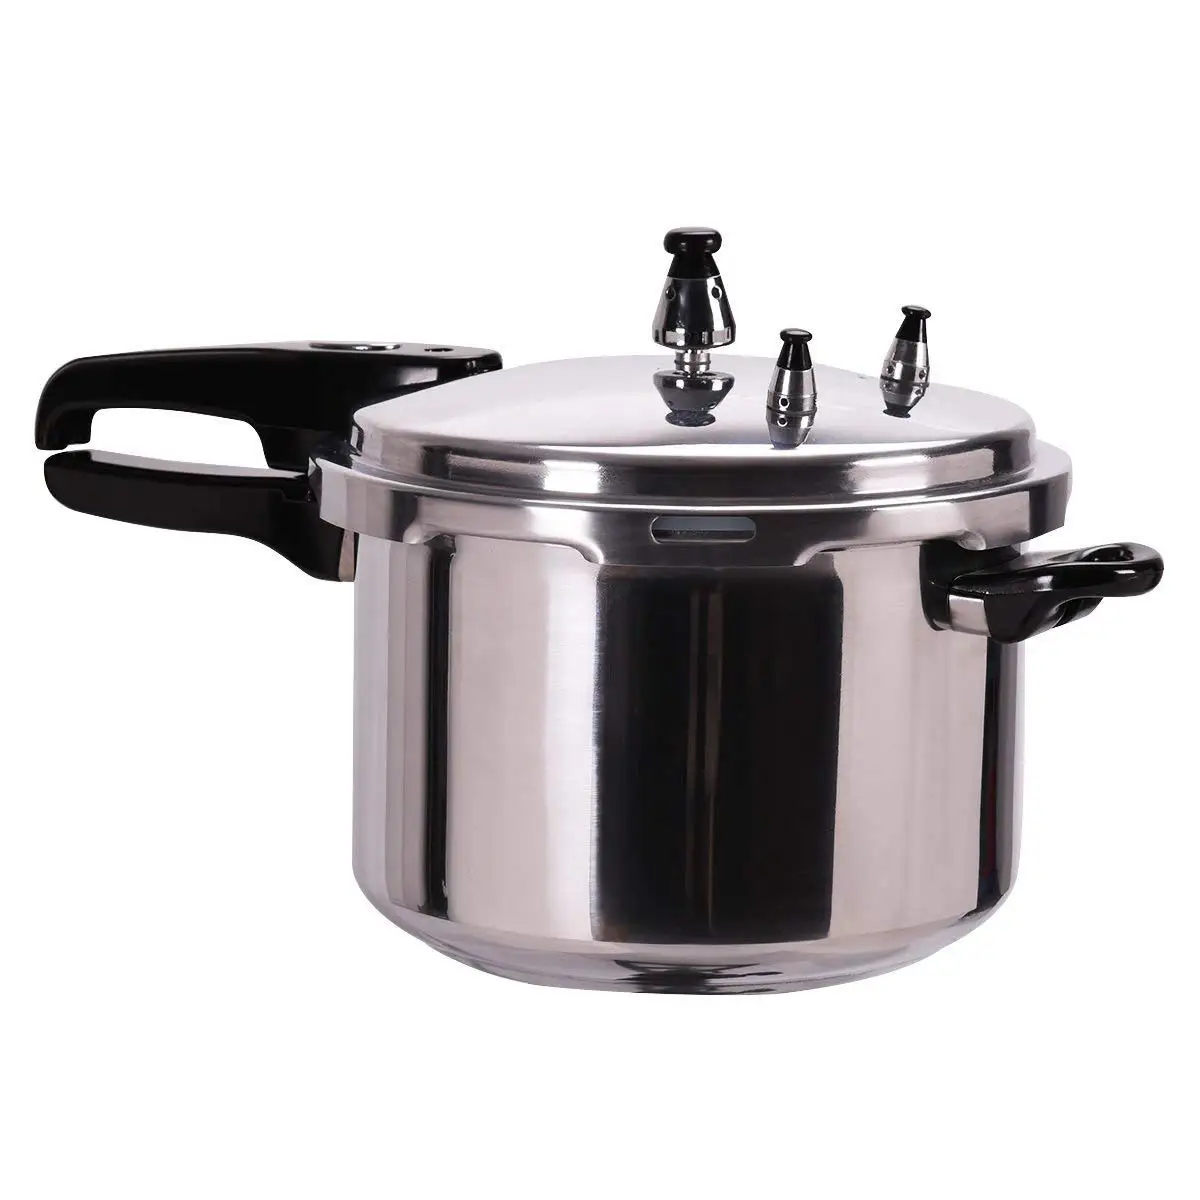 Cheap 1 Quart Cooking Pot, find 1 Quart Cooking Pot deals on line at